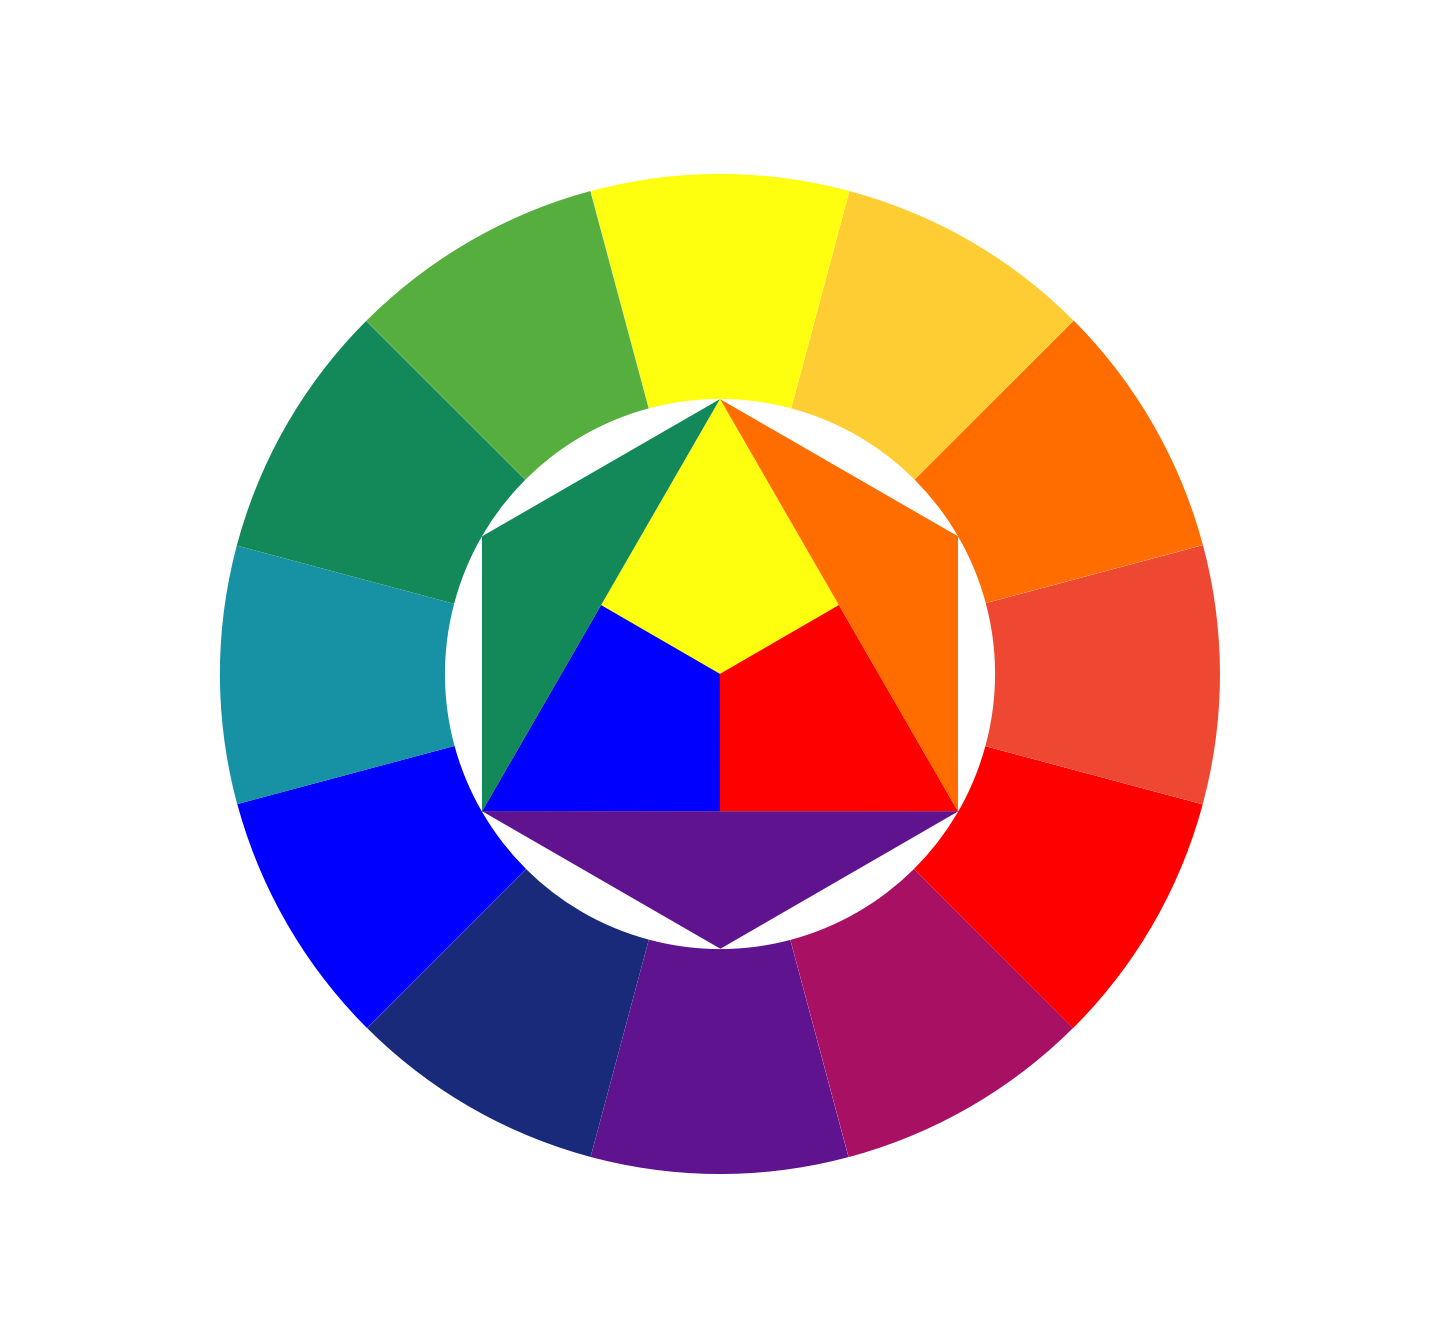 Colorscheme ru цветовой. Колористика круг Иттена. Спектр Иттена. Теория цветовой схемы Йоханнеса Иттена. Цветовой круг Иттена контрасты.